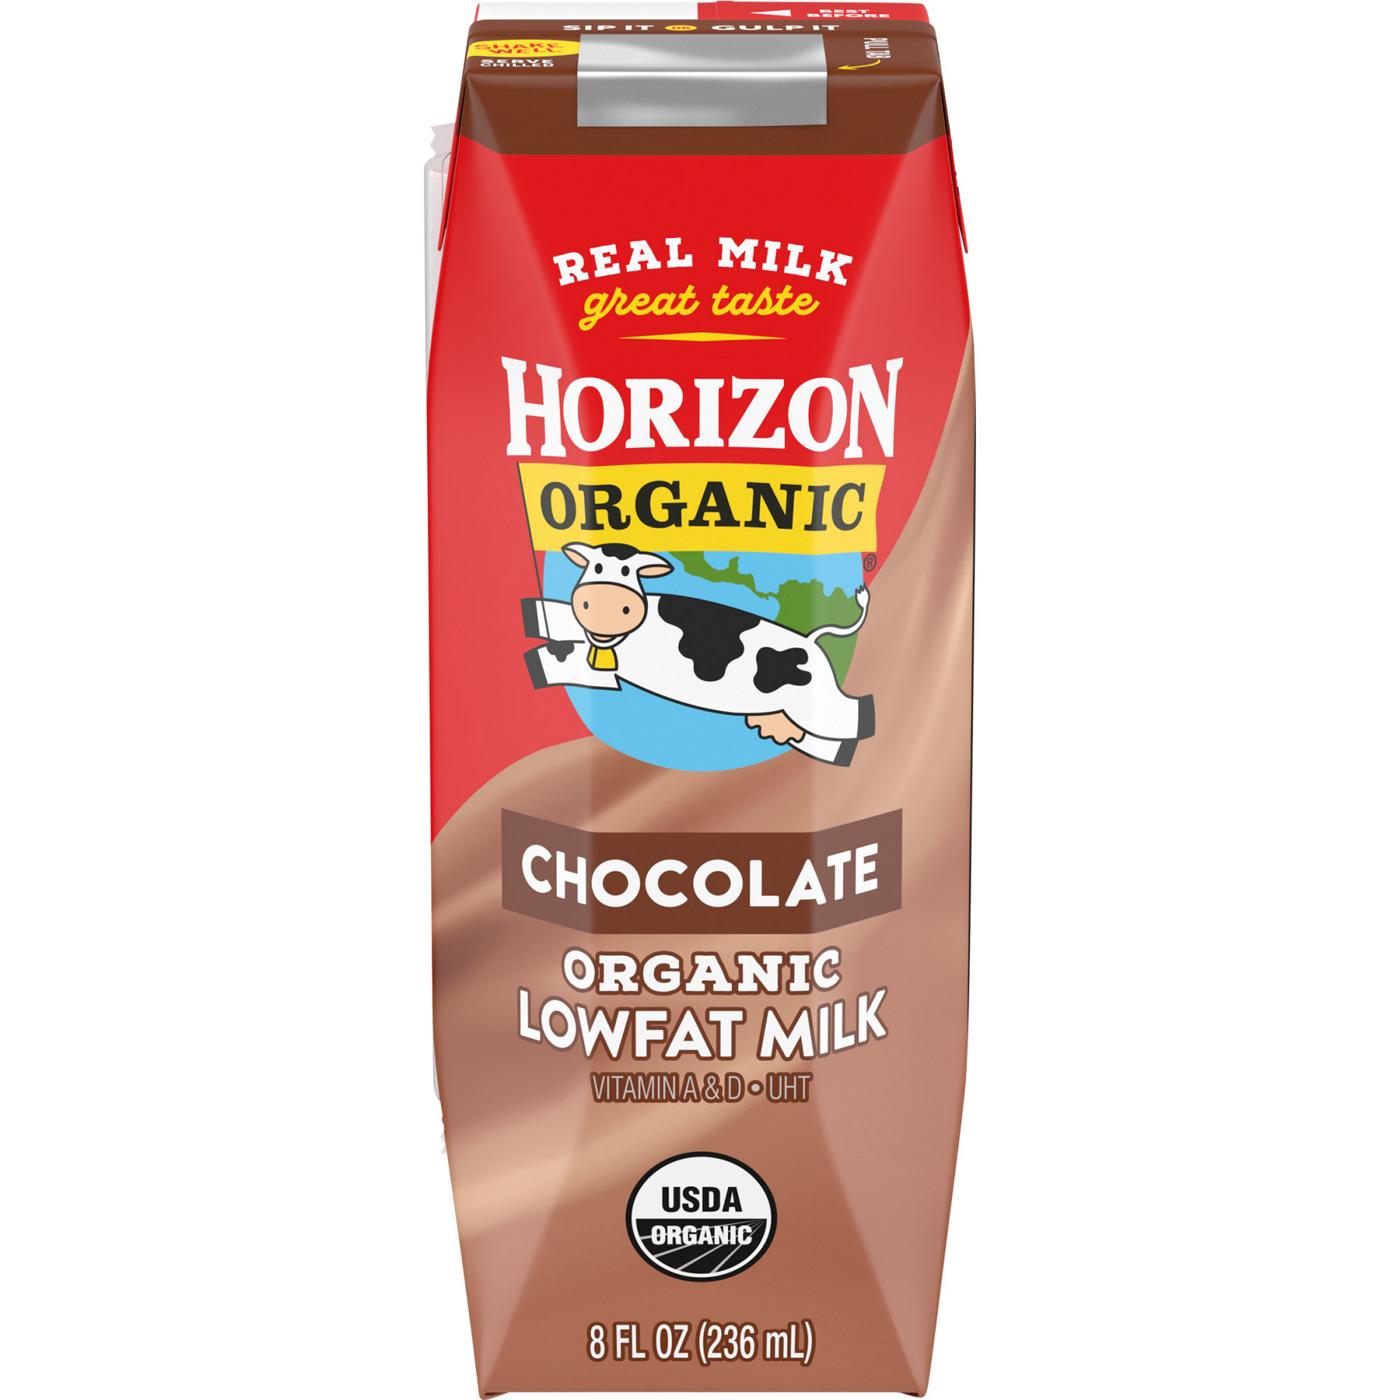 Horizon Organic 1% Lowfat Chocolate Milk; image 1 of 5